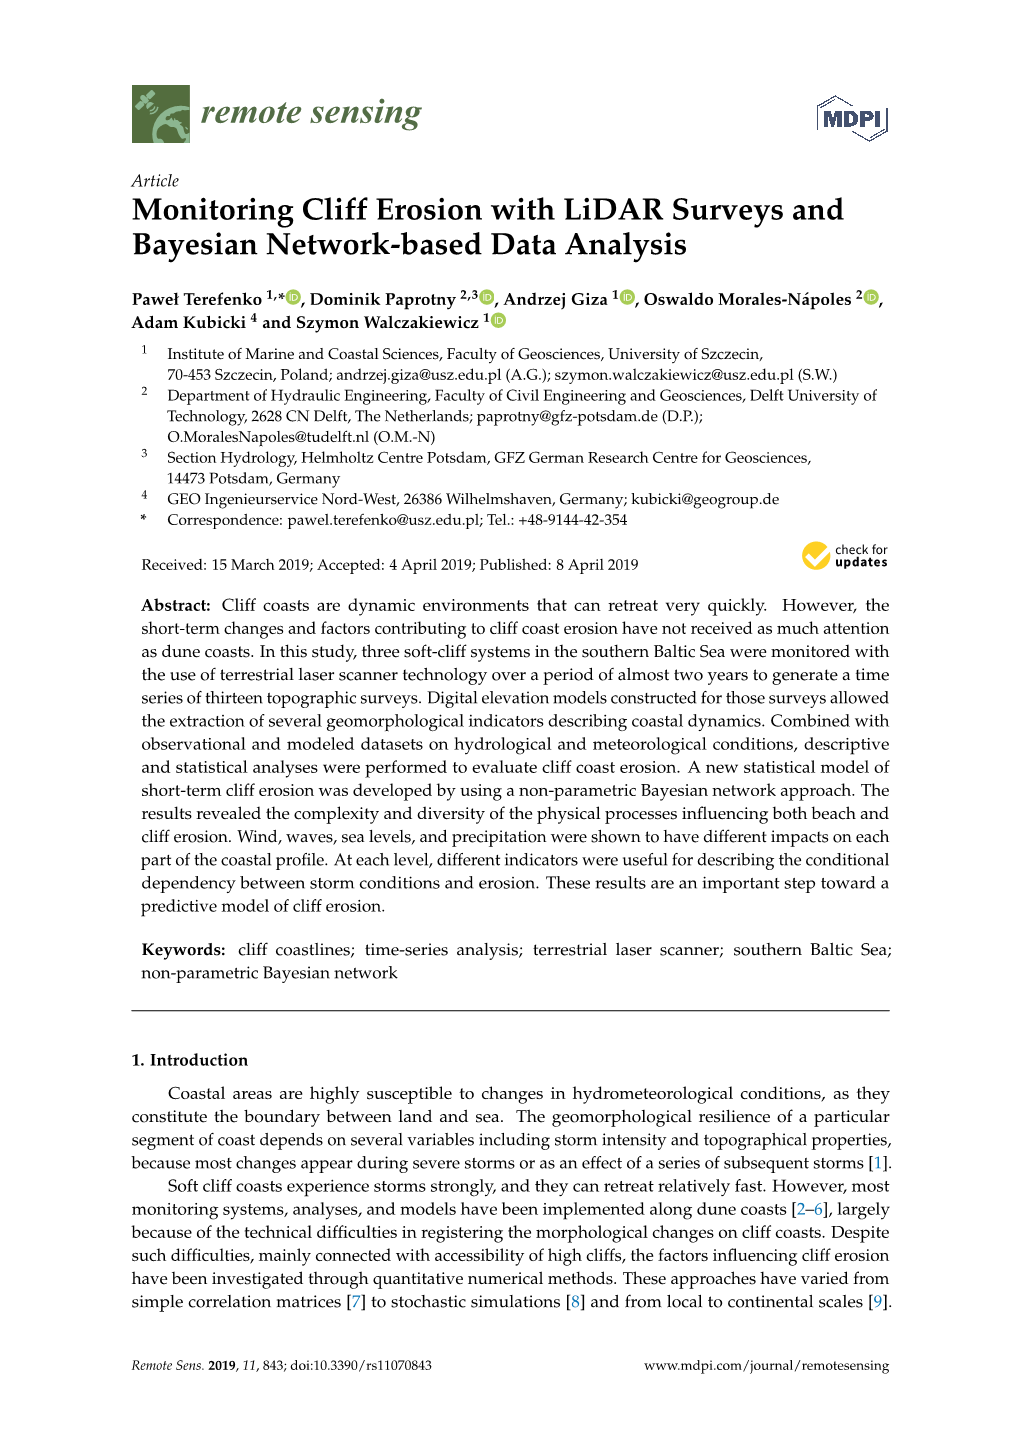 Monitoring Cliff Erosion with Lidar Surveys and Bayesian Network-Based Data Analysis